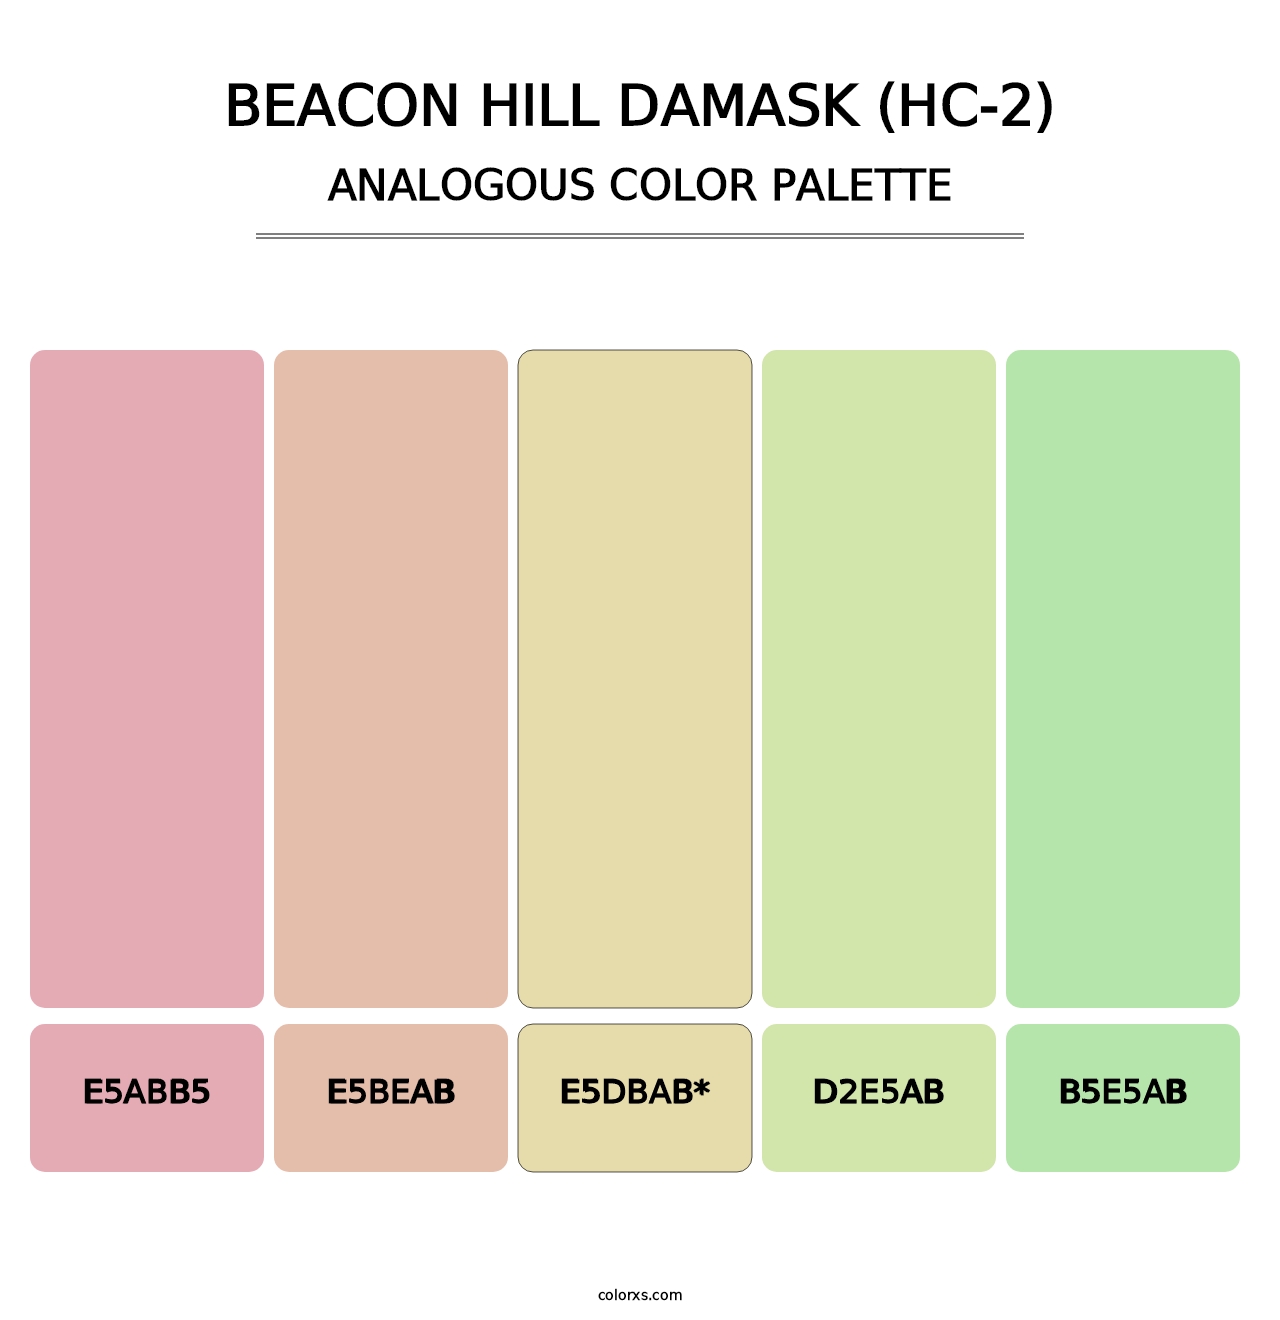 Beacon Hill Damask (HC-2) - Analogous Color Palette